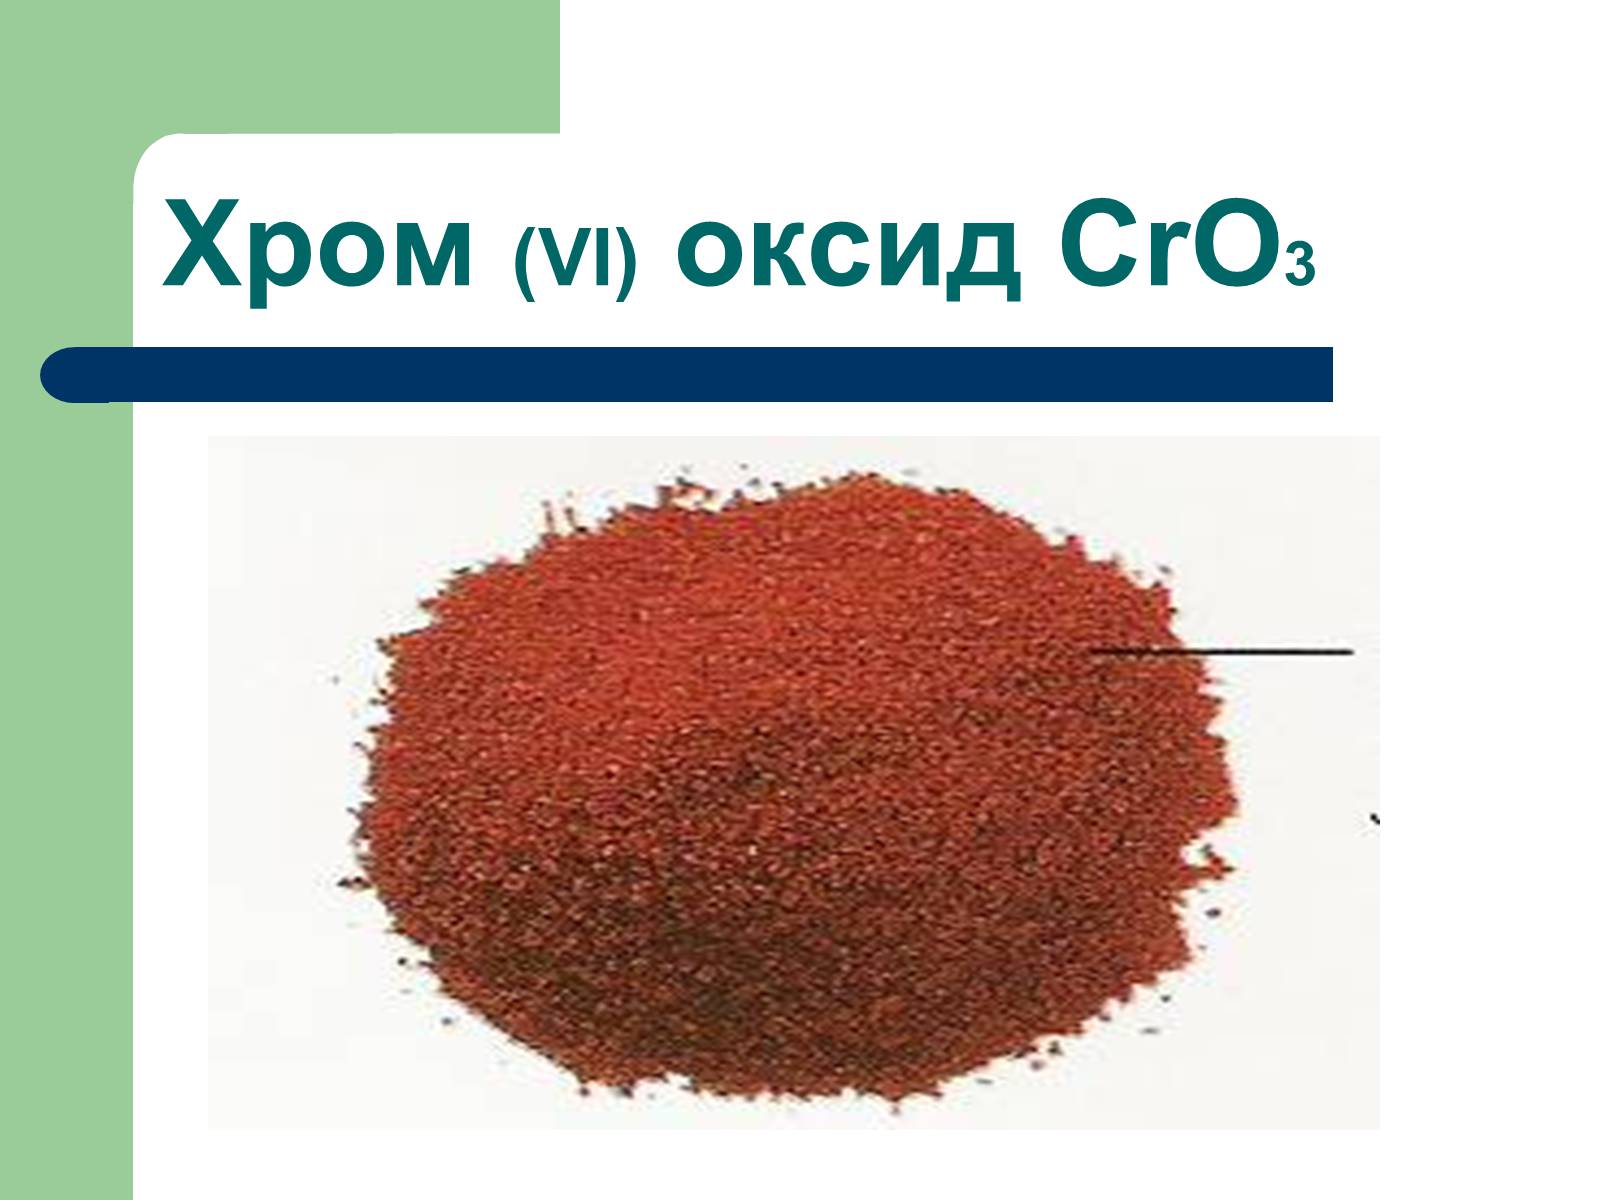 Оксид хрома 4 гидроксид натрия. Оксид хрома cro3. Оксид хрома 2. Оксид хрома 2 цвет. Оксид хрома цвет.